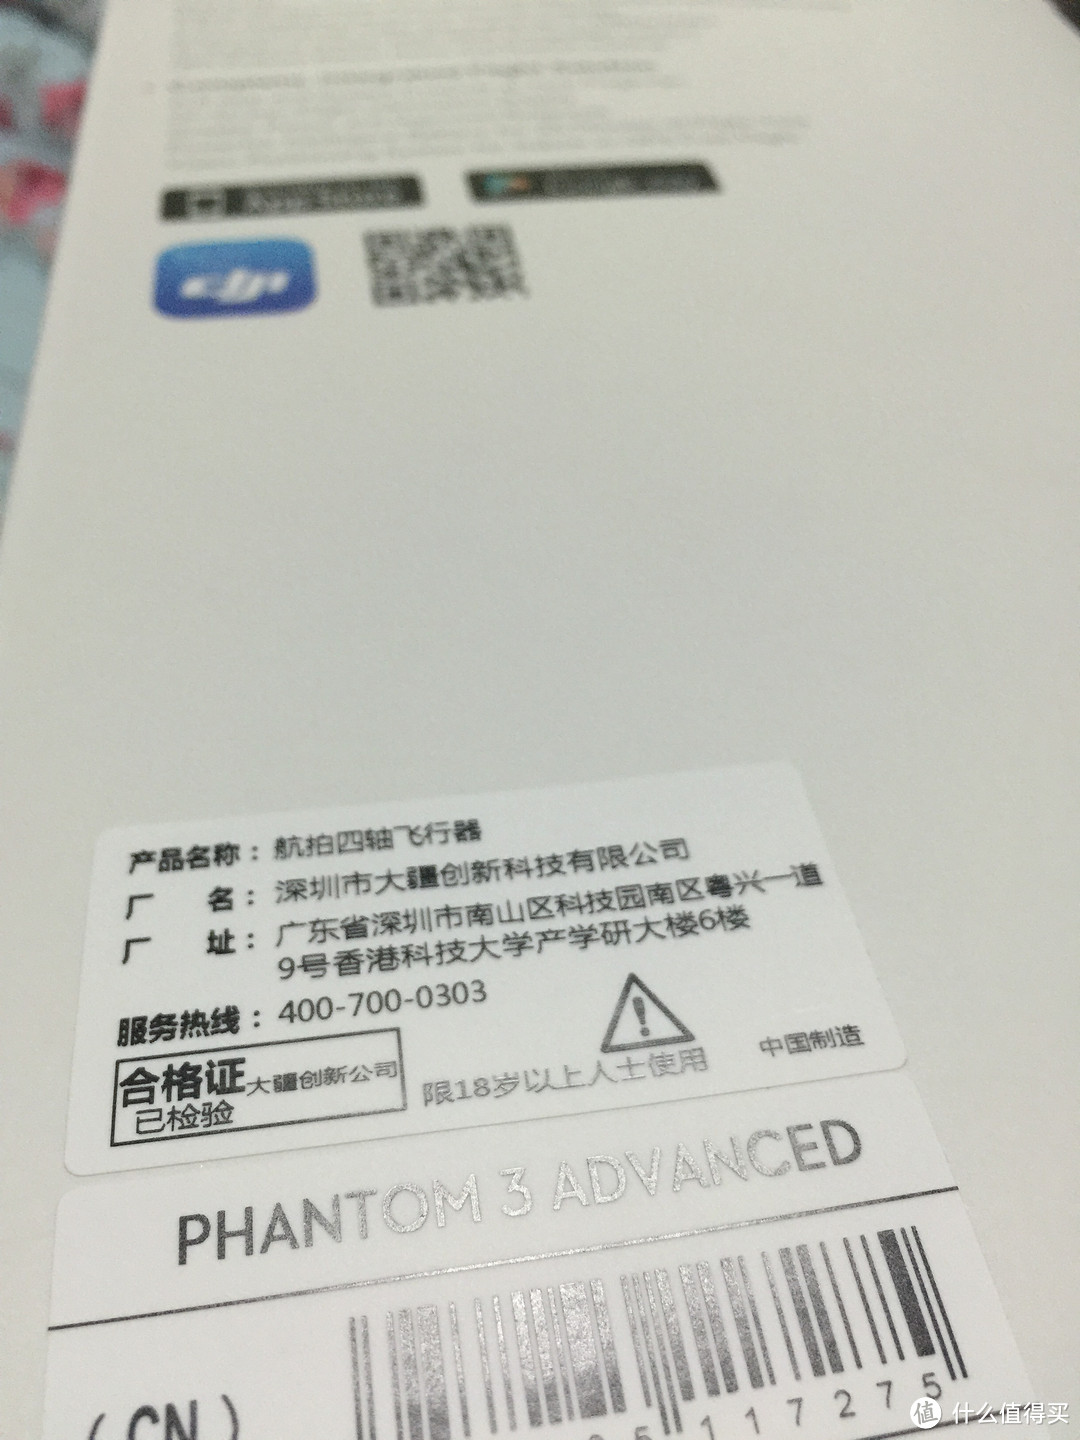 DJI 大疆 Phantom 3 Advanced 带额外电池套装入坑晒图